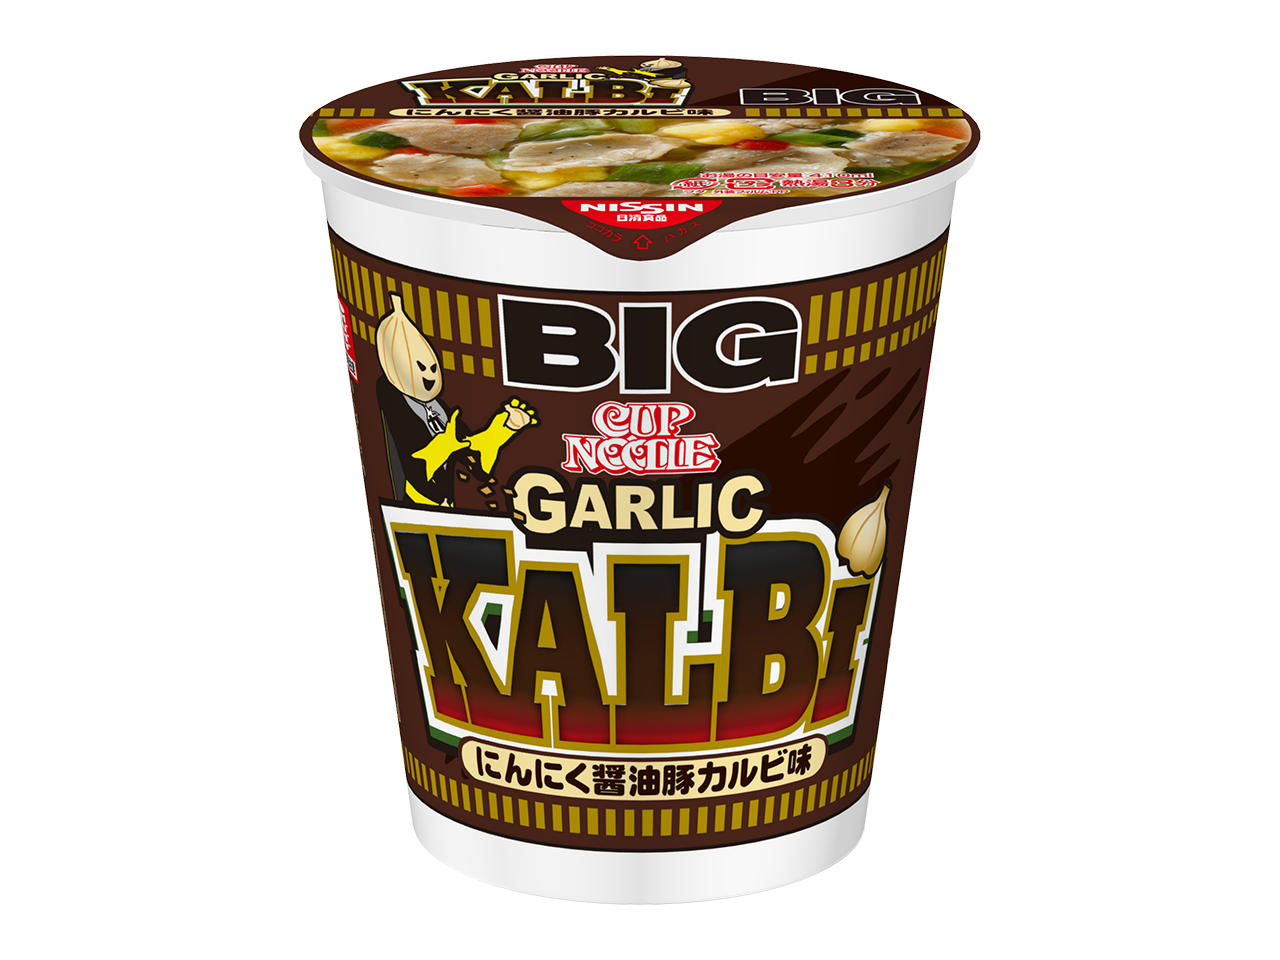 CUPNOODLE BIG GARLIC KALBI Instant Noodle, Cup Noodles, Instant Recipes